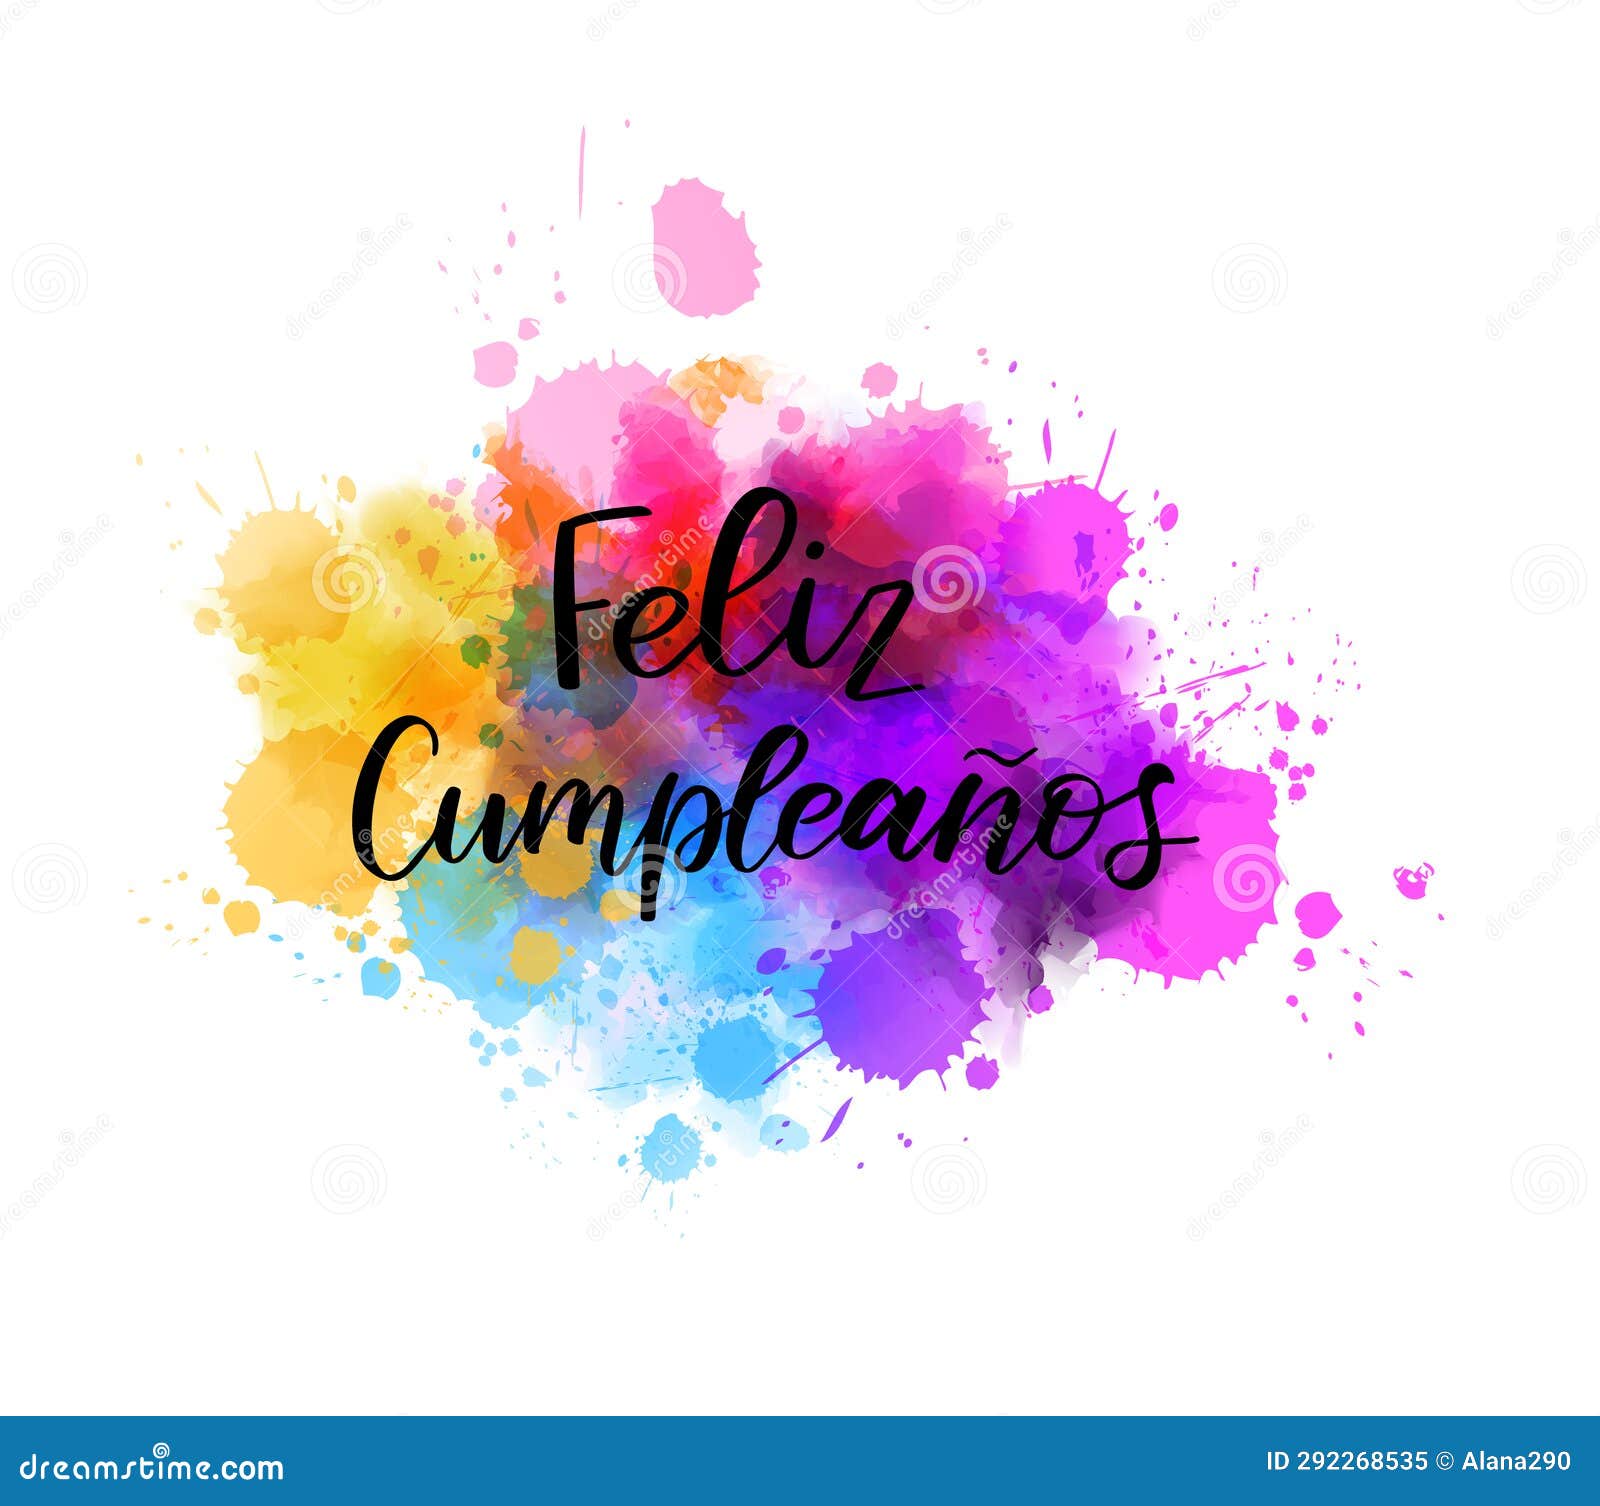 feliz cumpleanos - happy birthday in spanish.